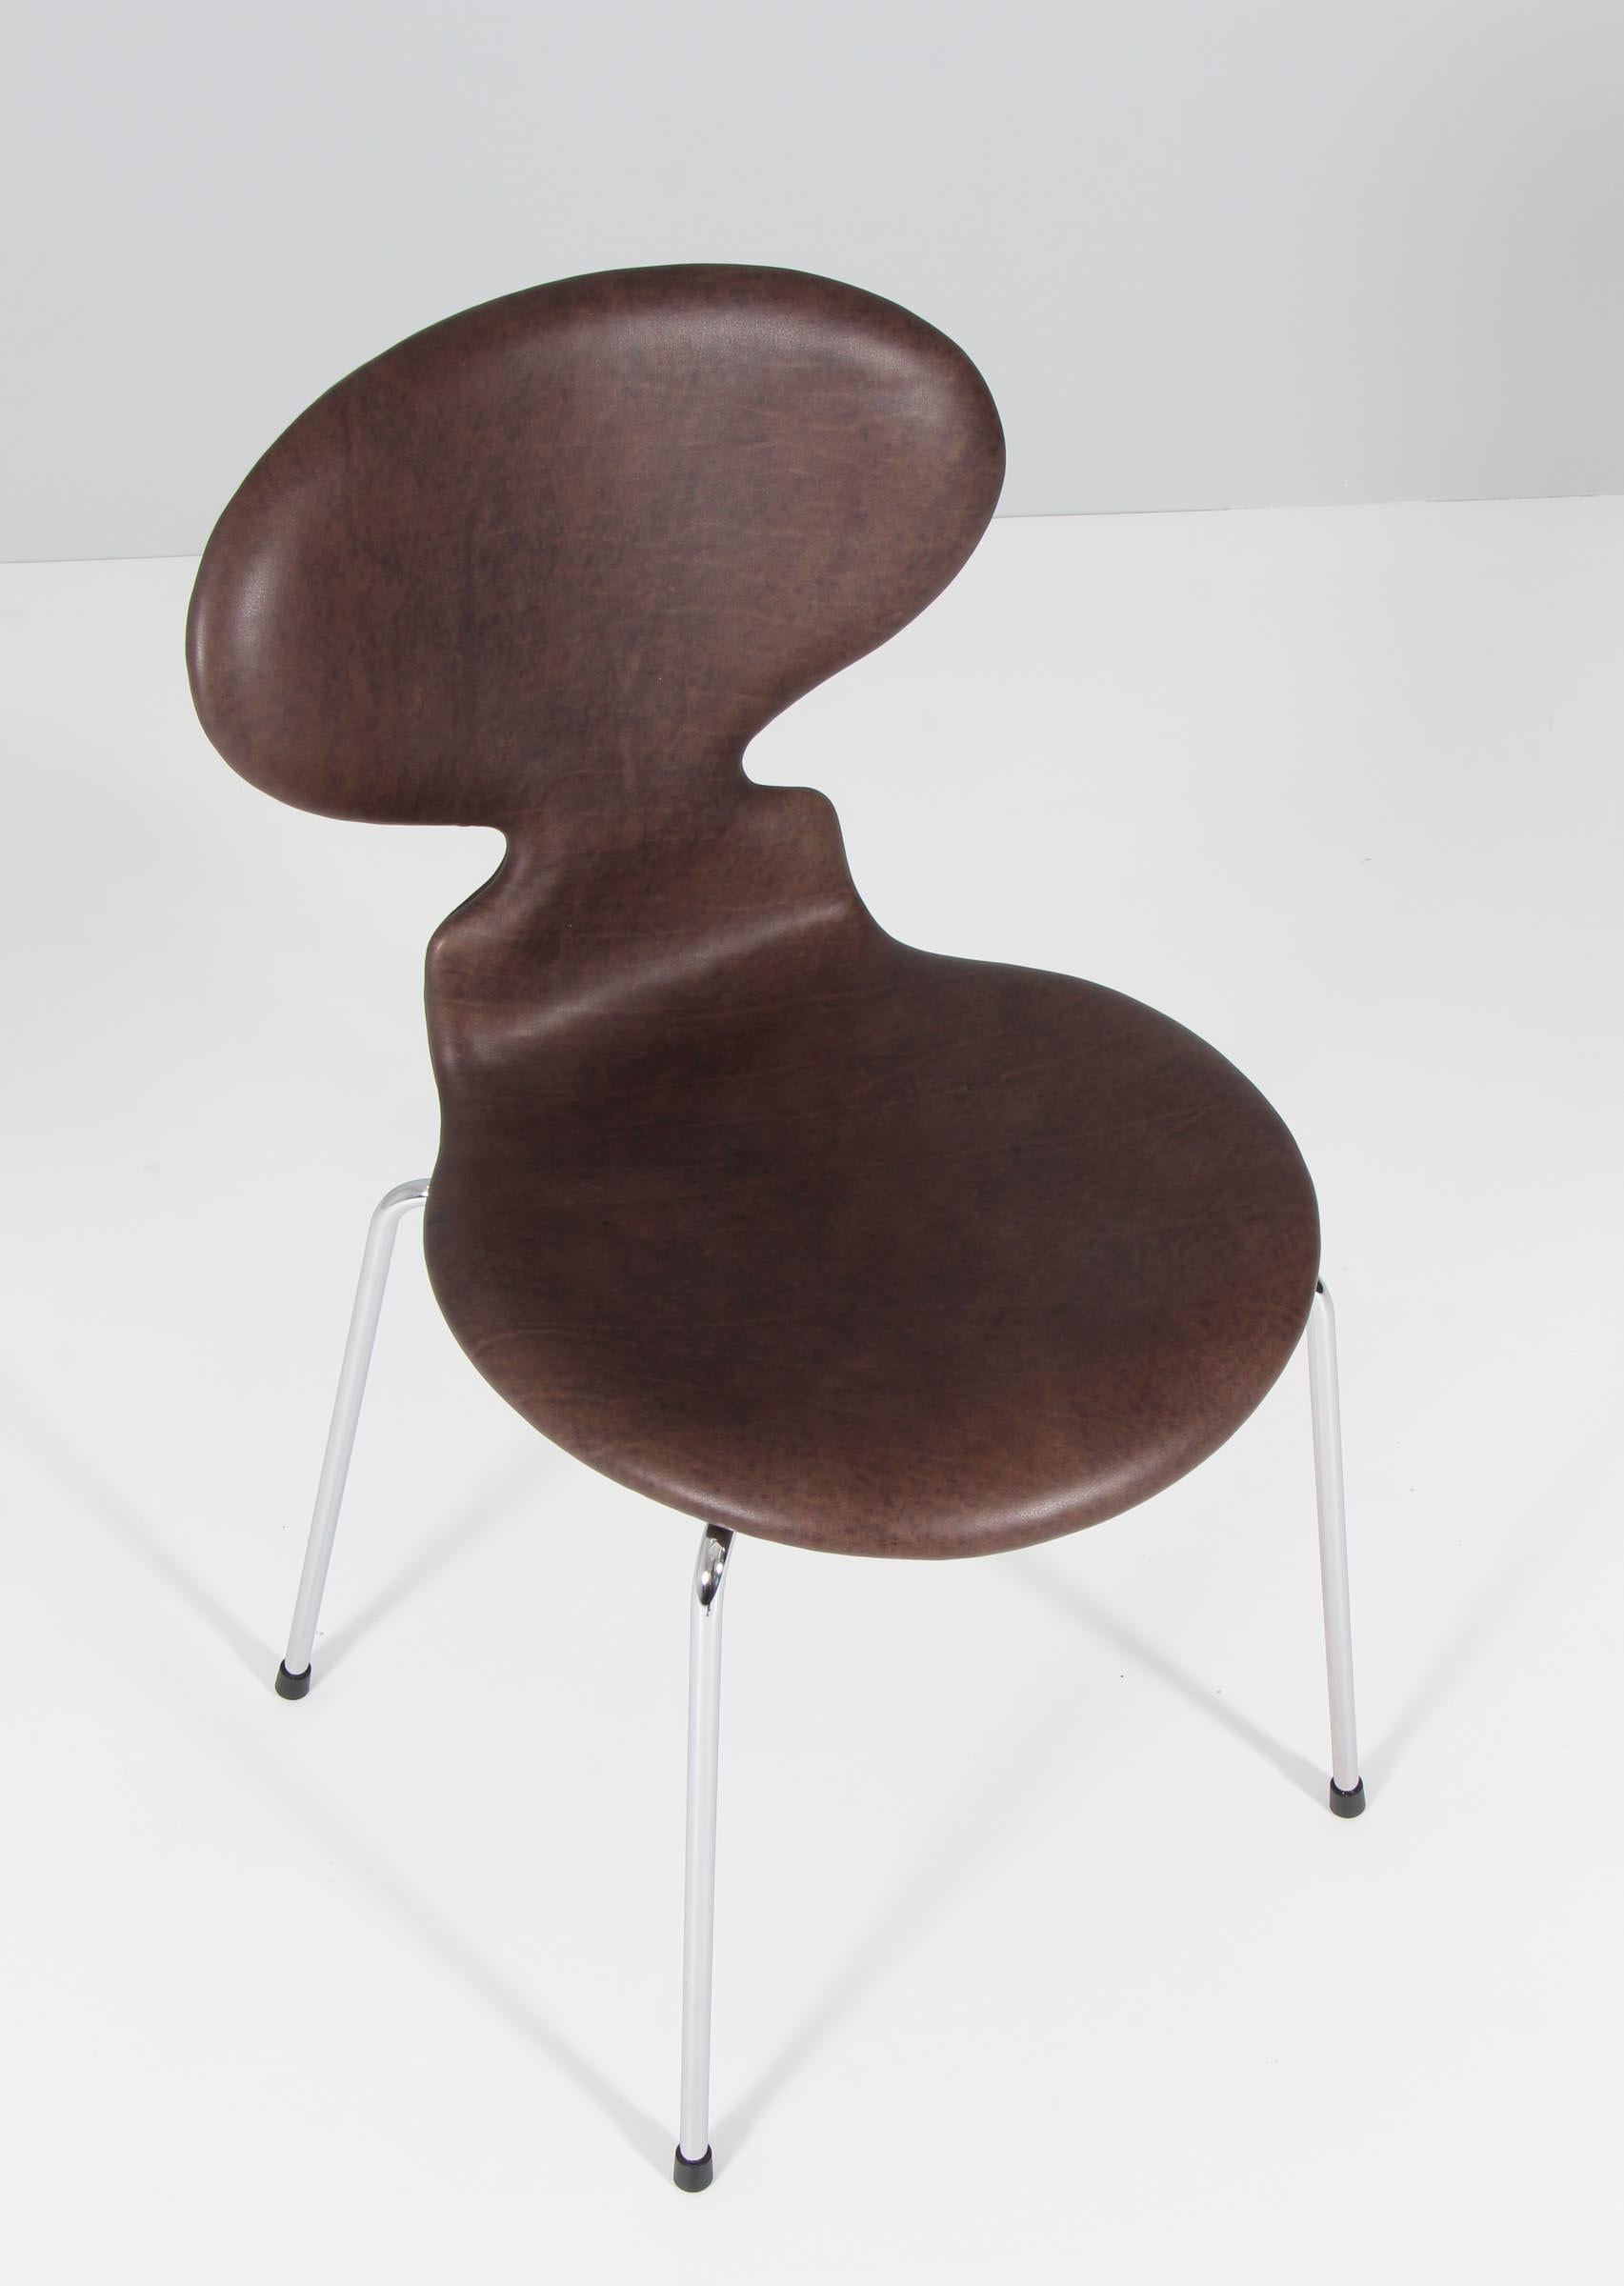 Arne Jacobsen dining chairs, new upholstered with mokka aniline leather. 

Chromed base. 

Model 3101 